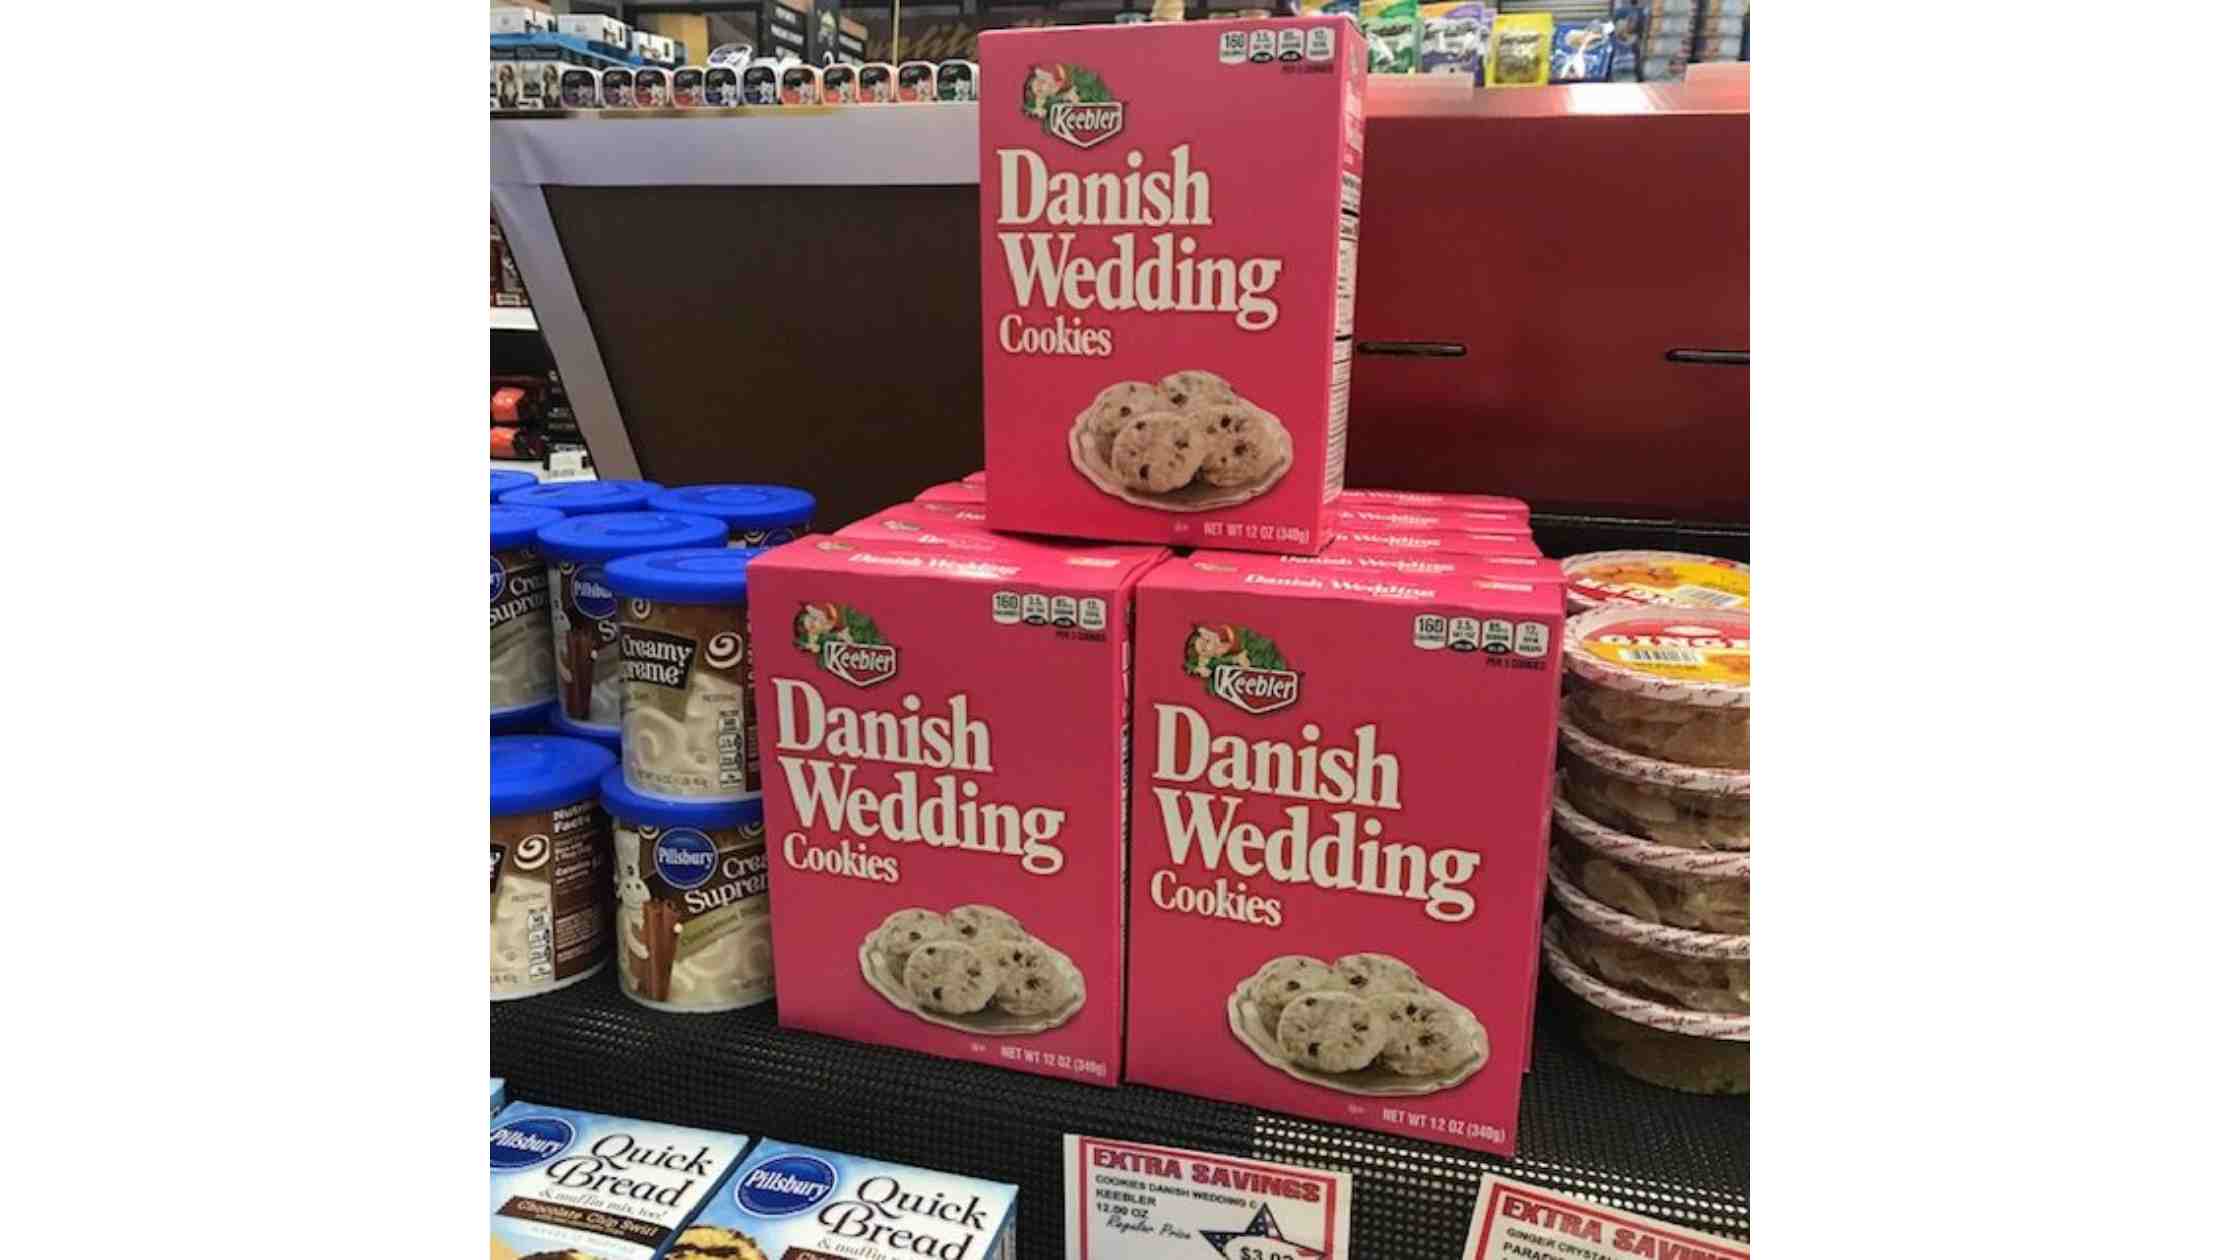 Danish wedding cookies discontinued - Is Keebler making it?